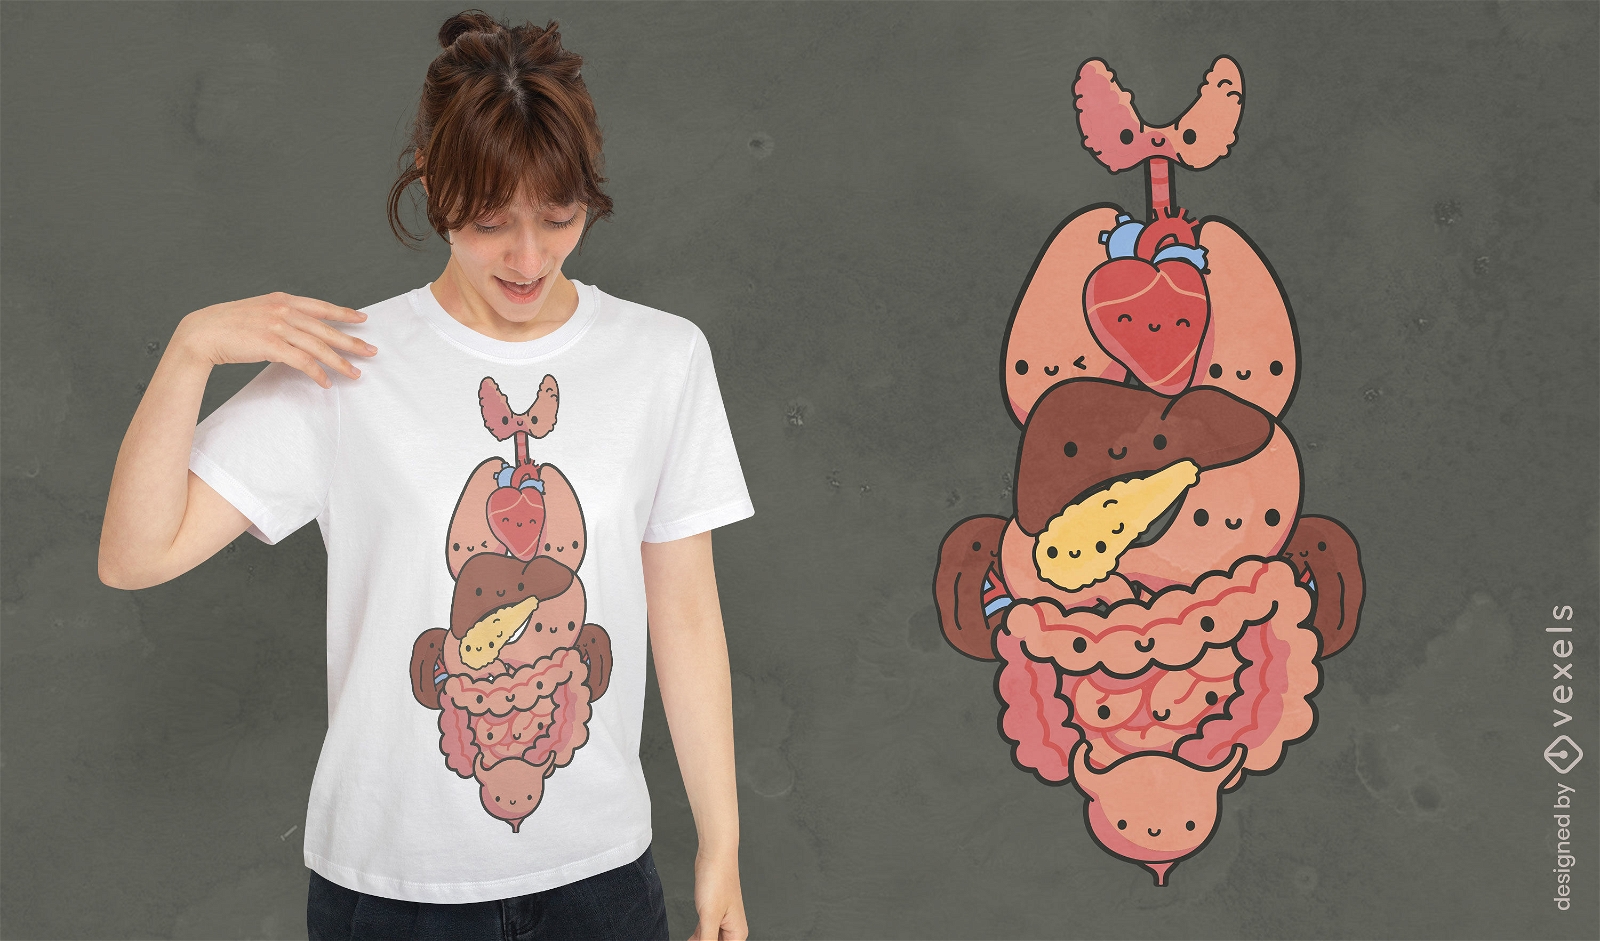 Cute anatomy t-shirt design 